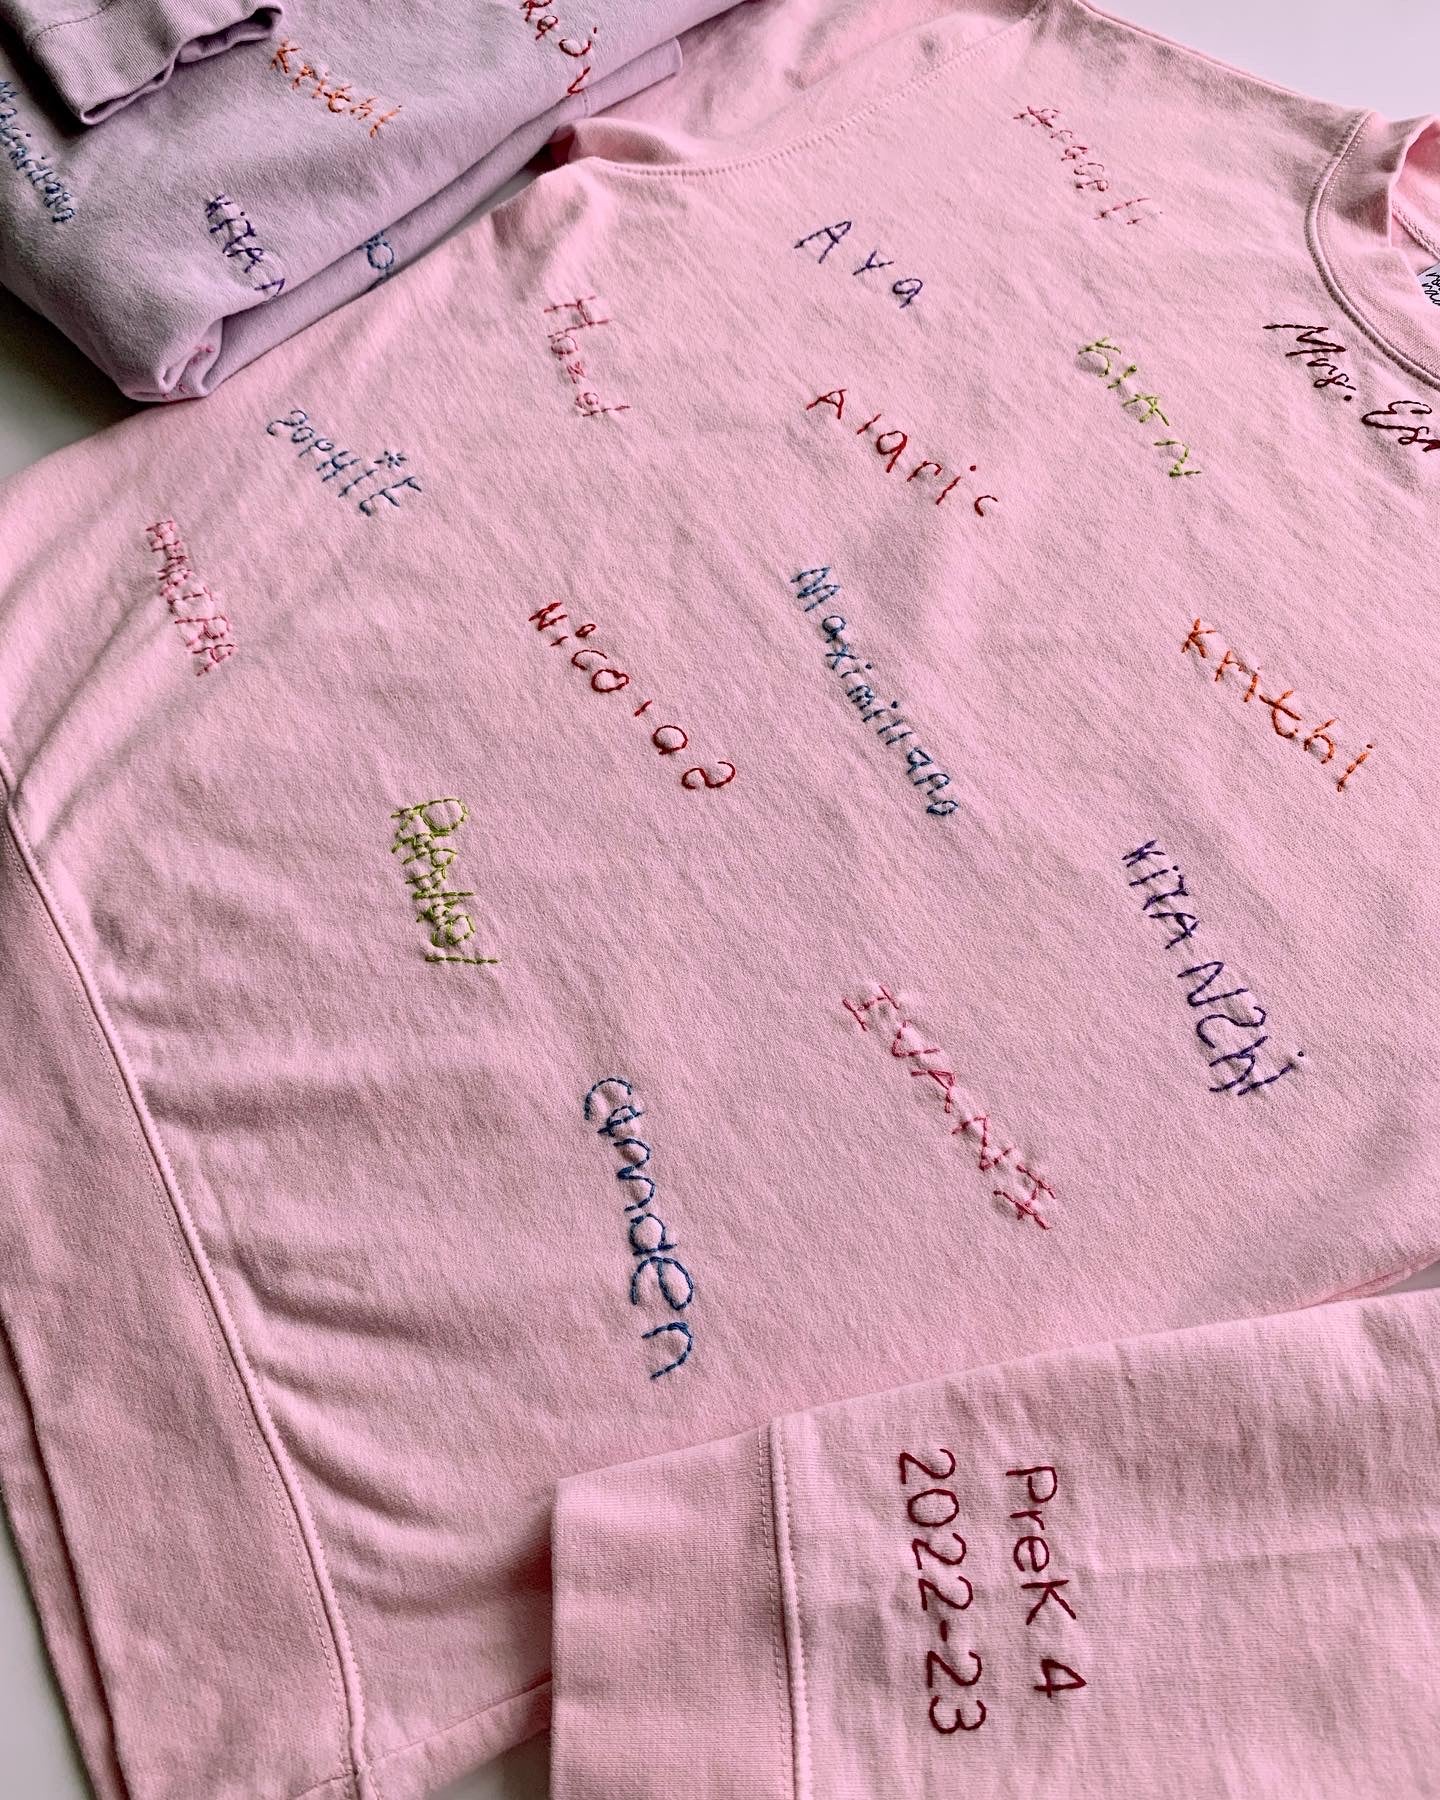 Kids' Names Hand Embroidered Sweatshirt